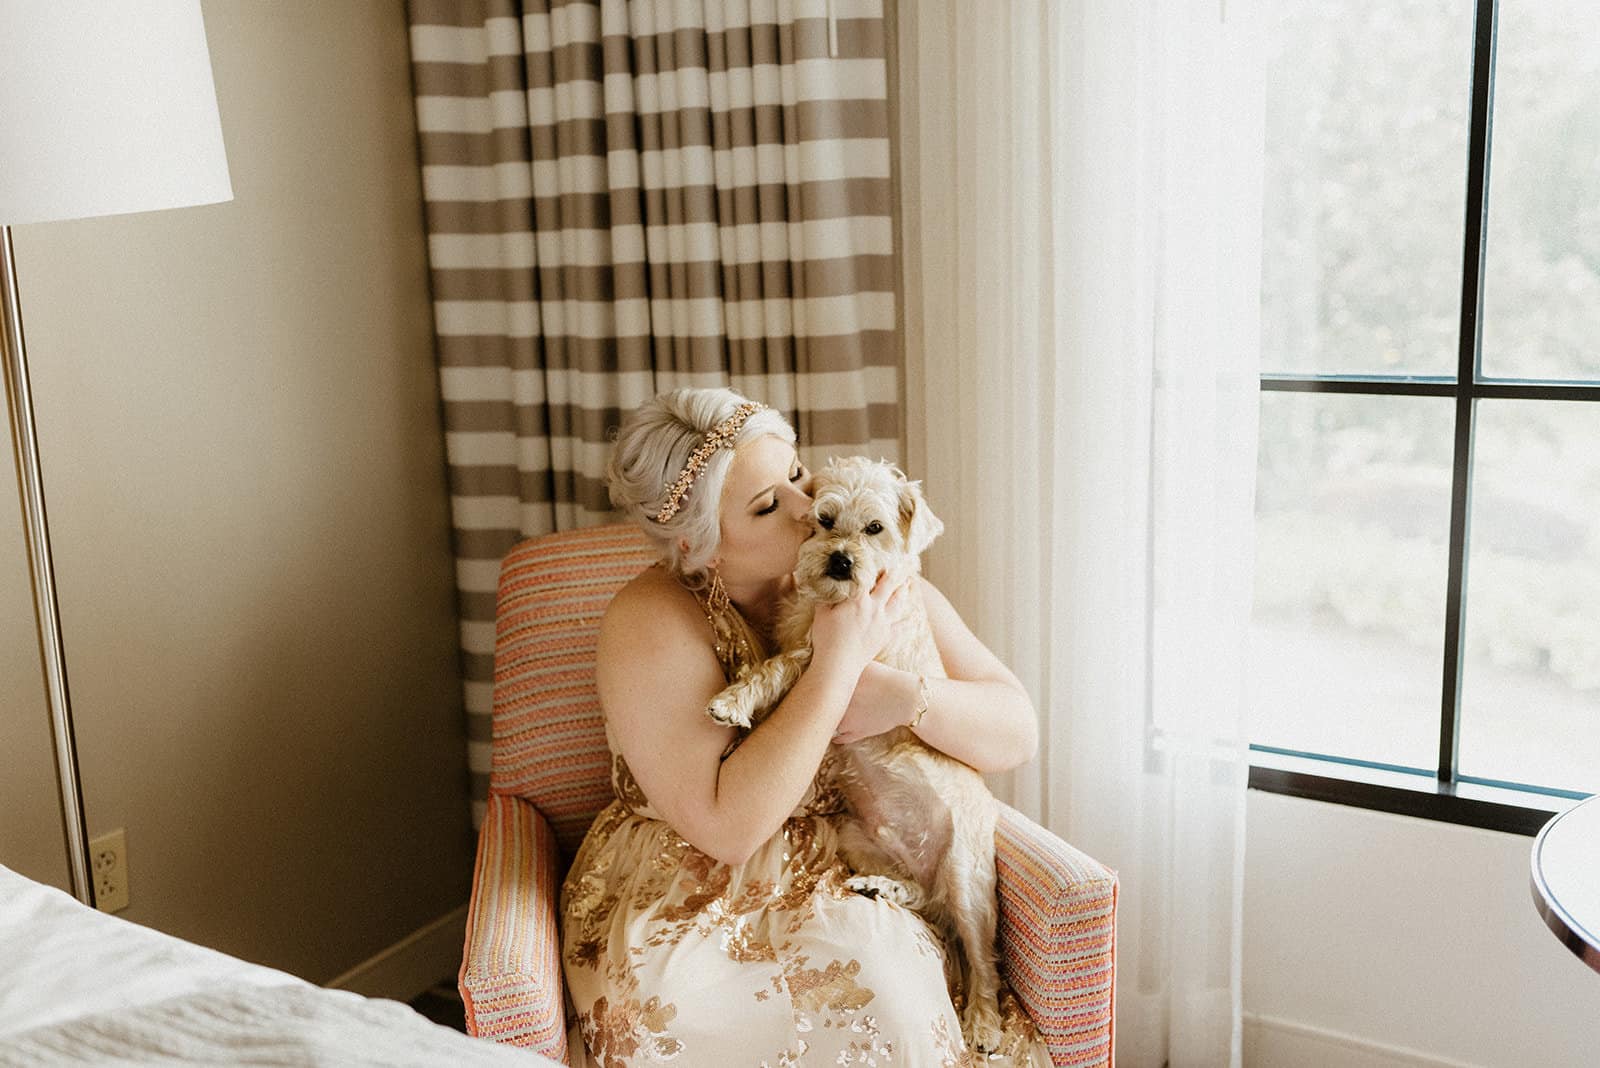 Garden Wedding - Just Marry Weddings - Josie Brooks Photography - Portraits